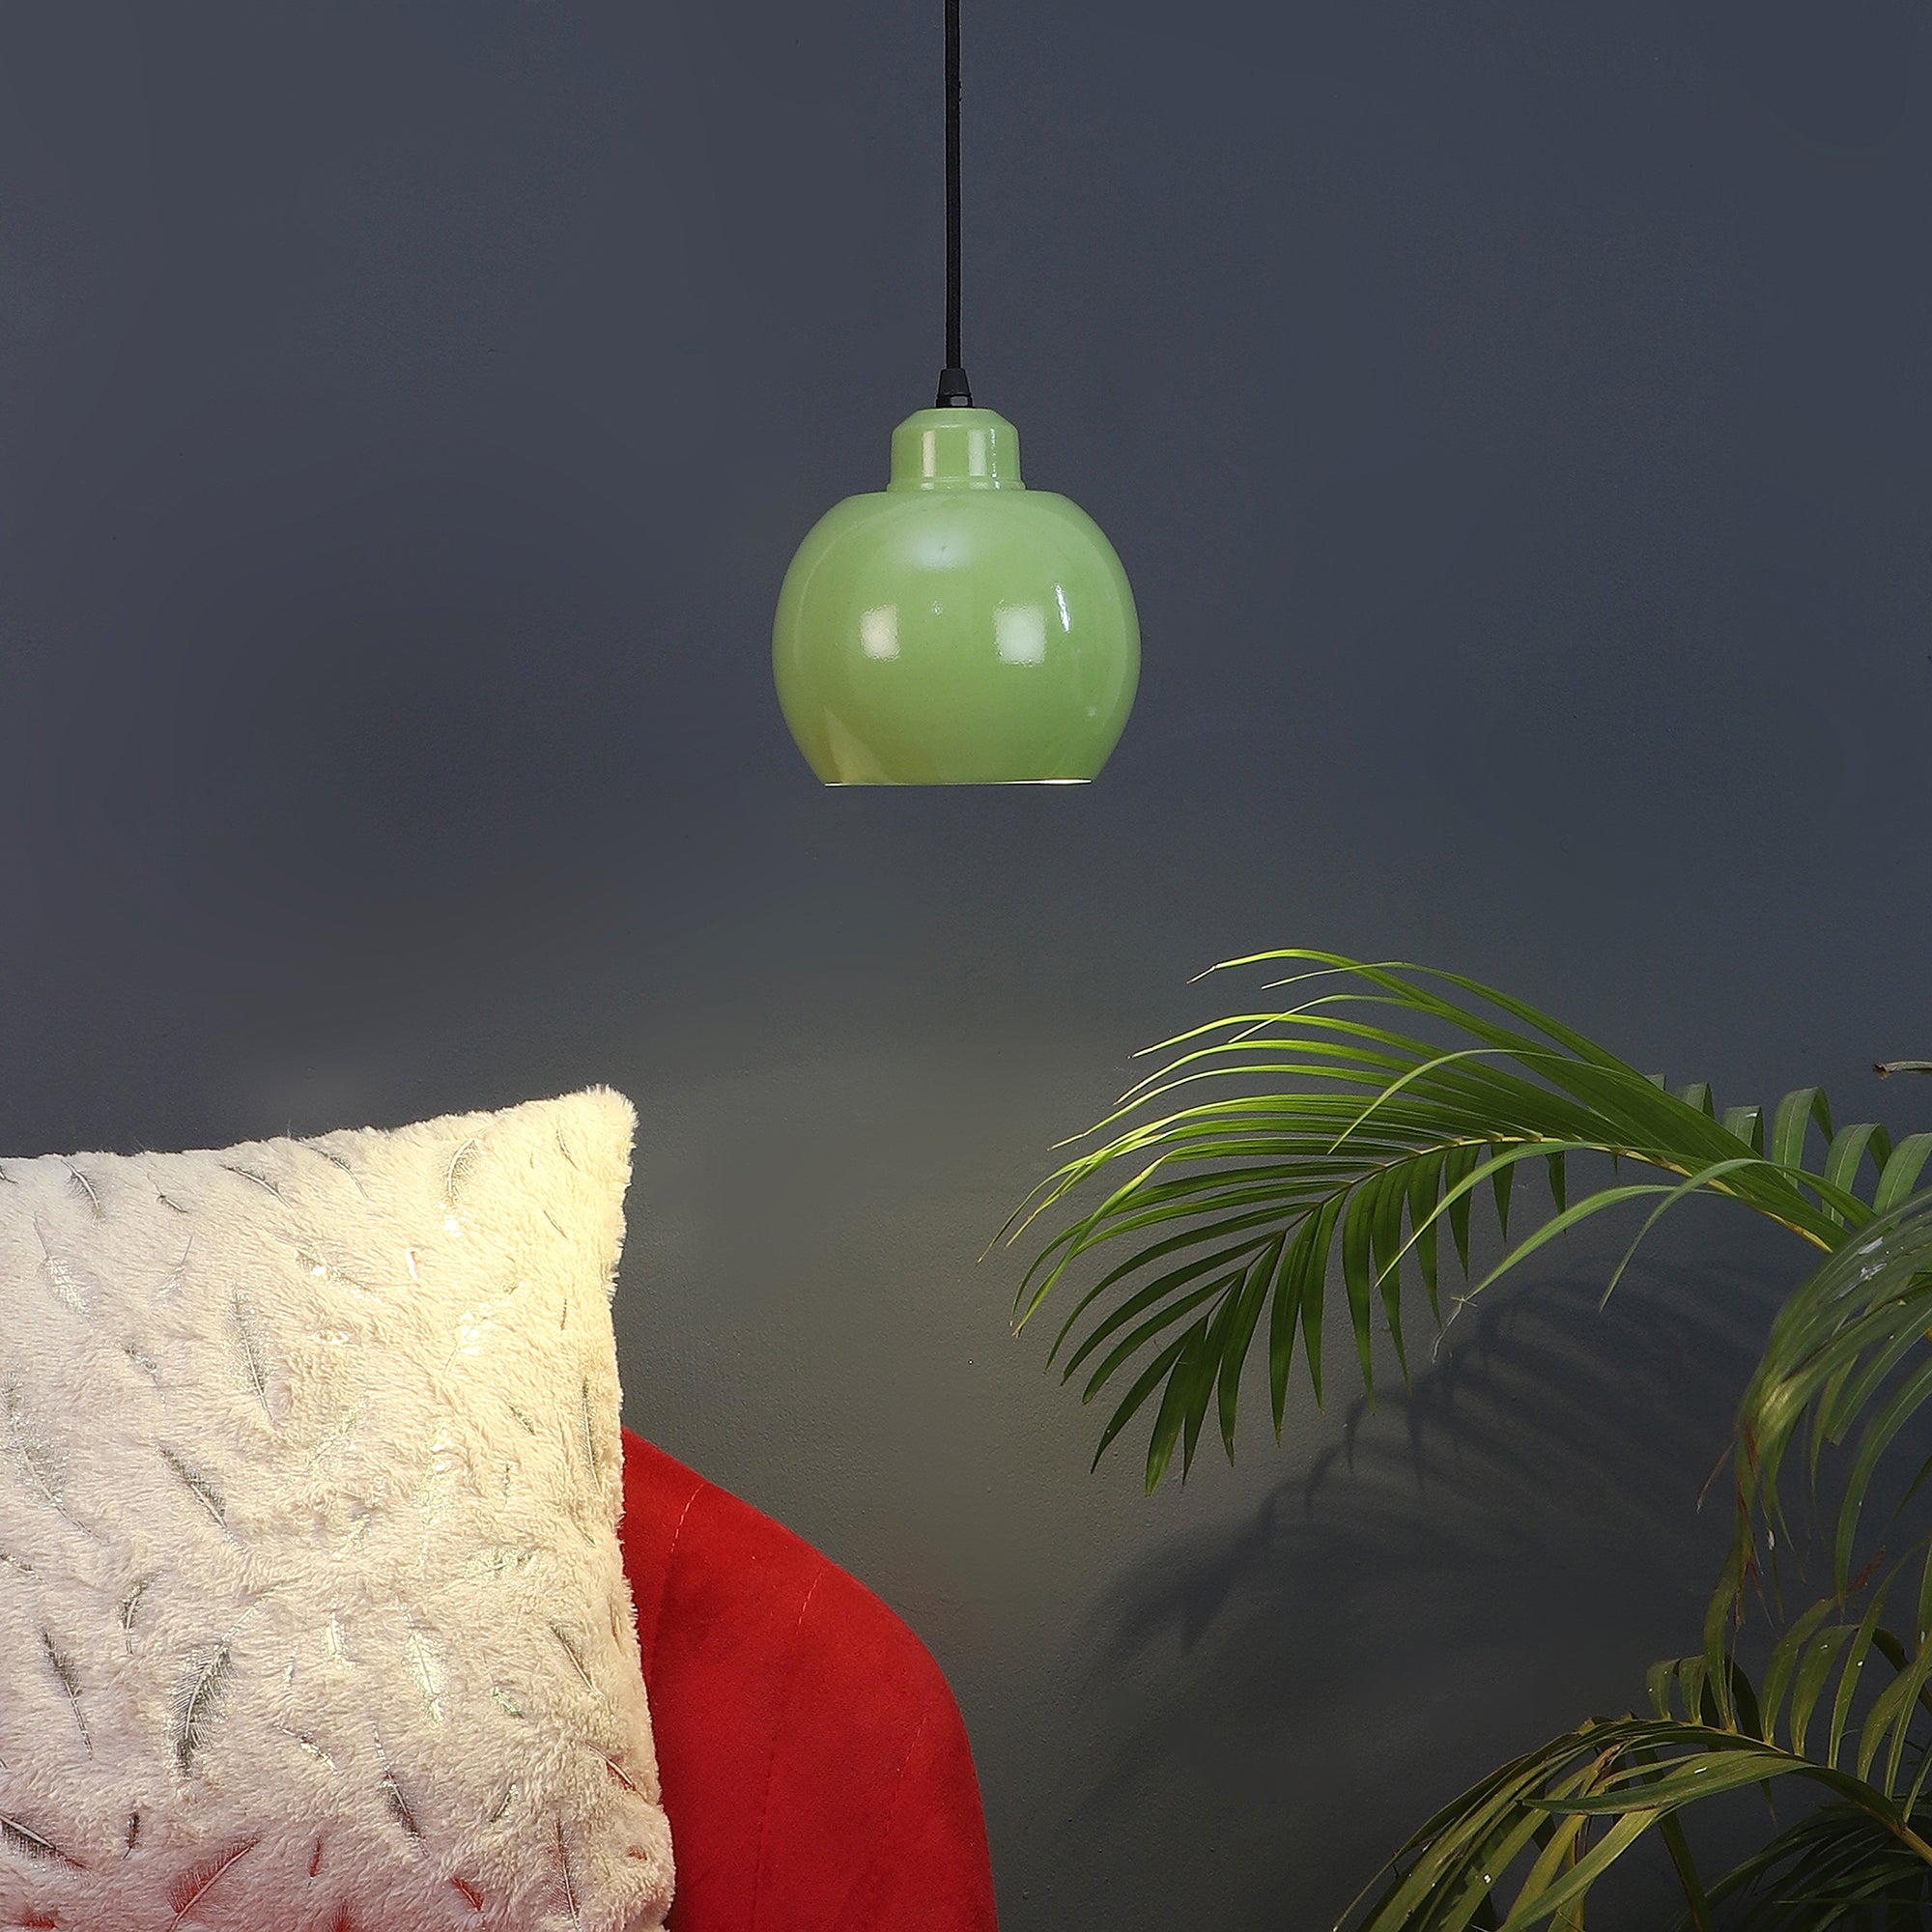 Muuto Green Metal Hanging Light by SS Lightings